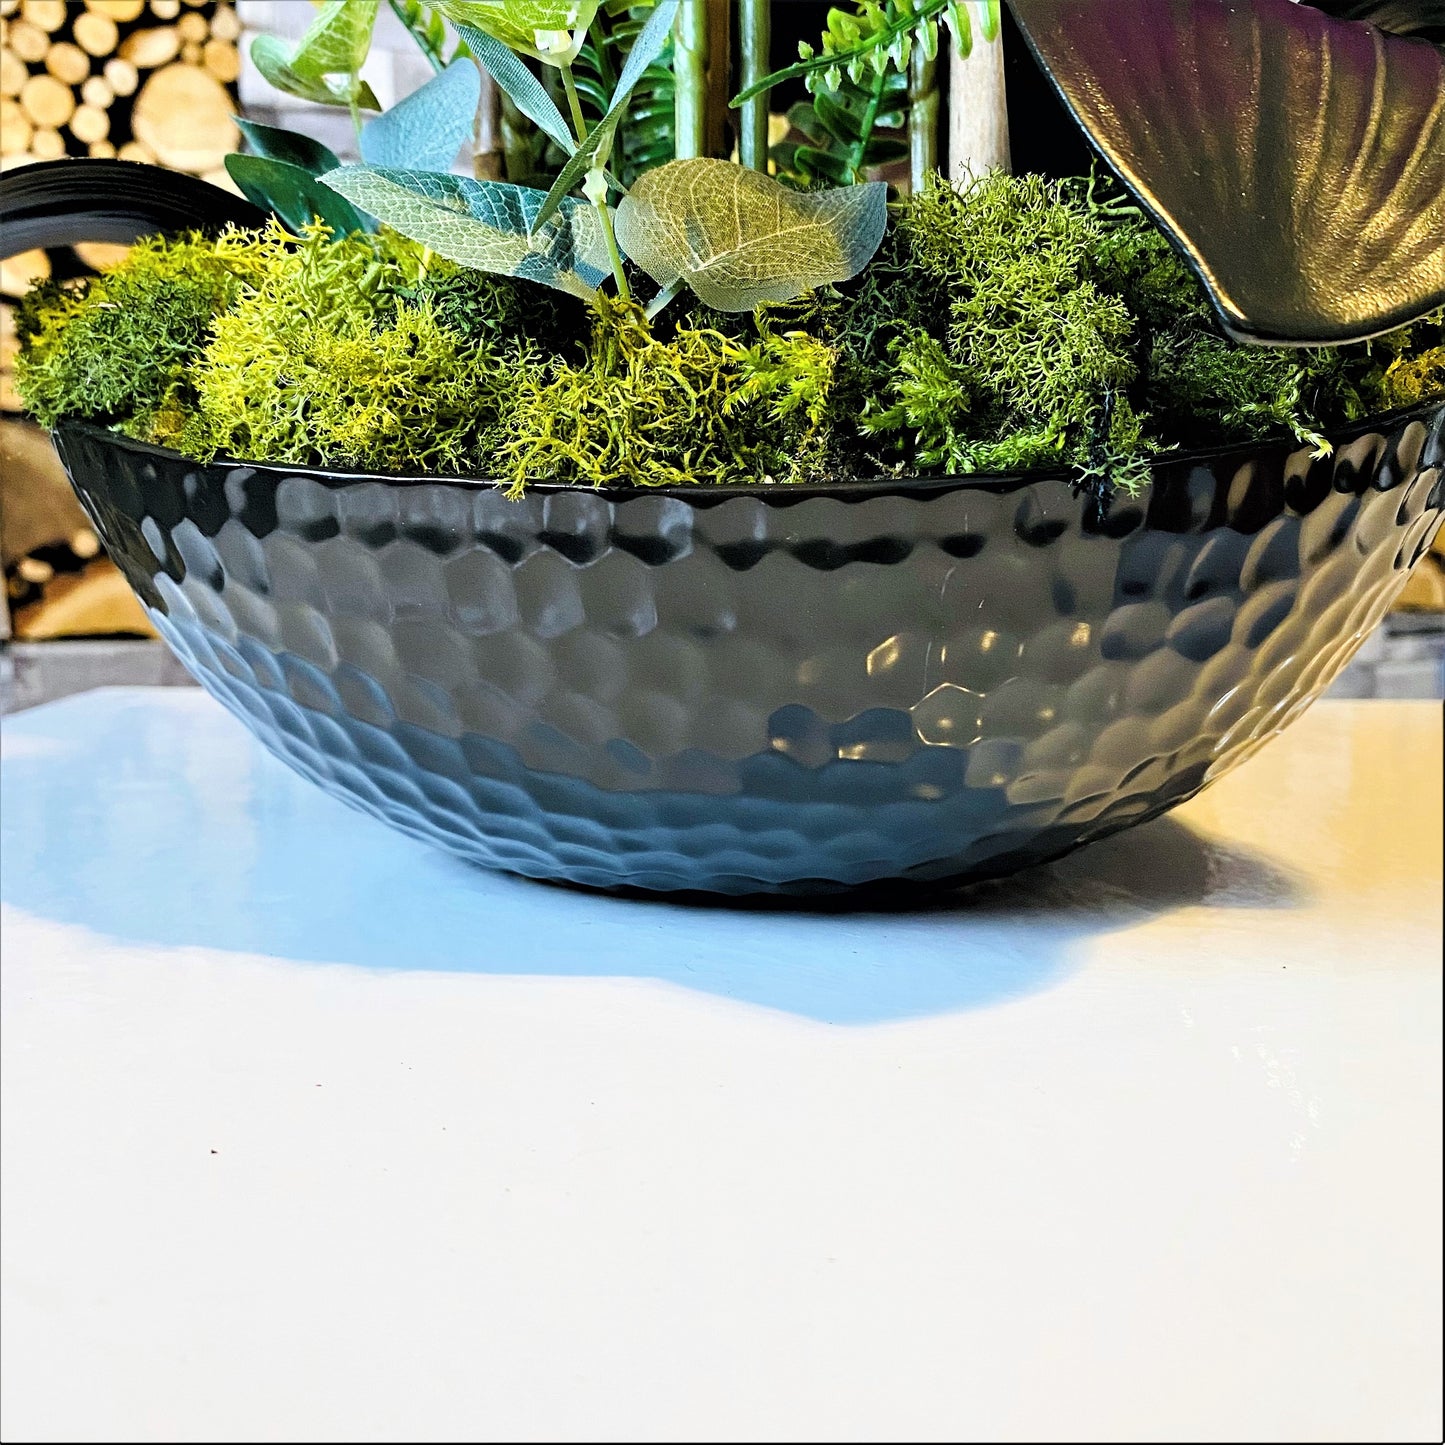 VOOGUE PARIS - Artificial PINK orchid flower in Hammered matte black bowl - Faux Arrangement Phalaenopsis - gift ideas